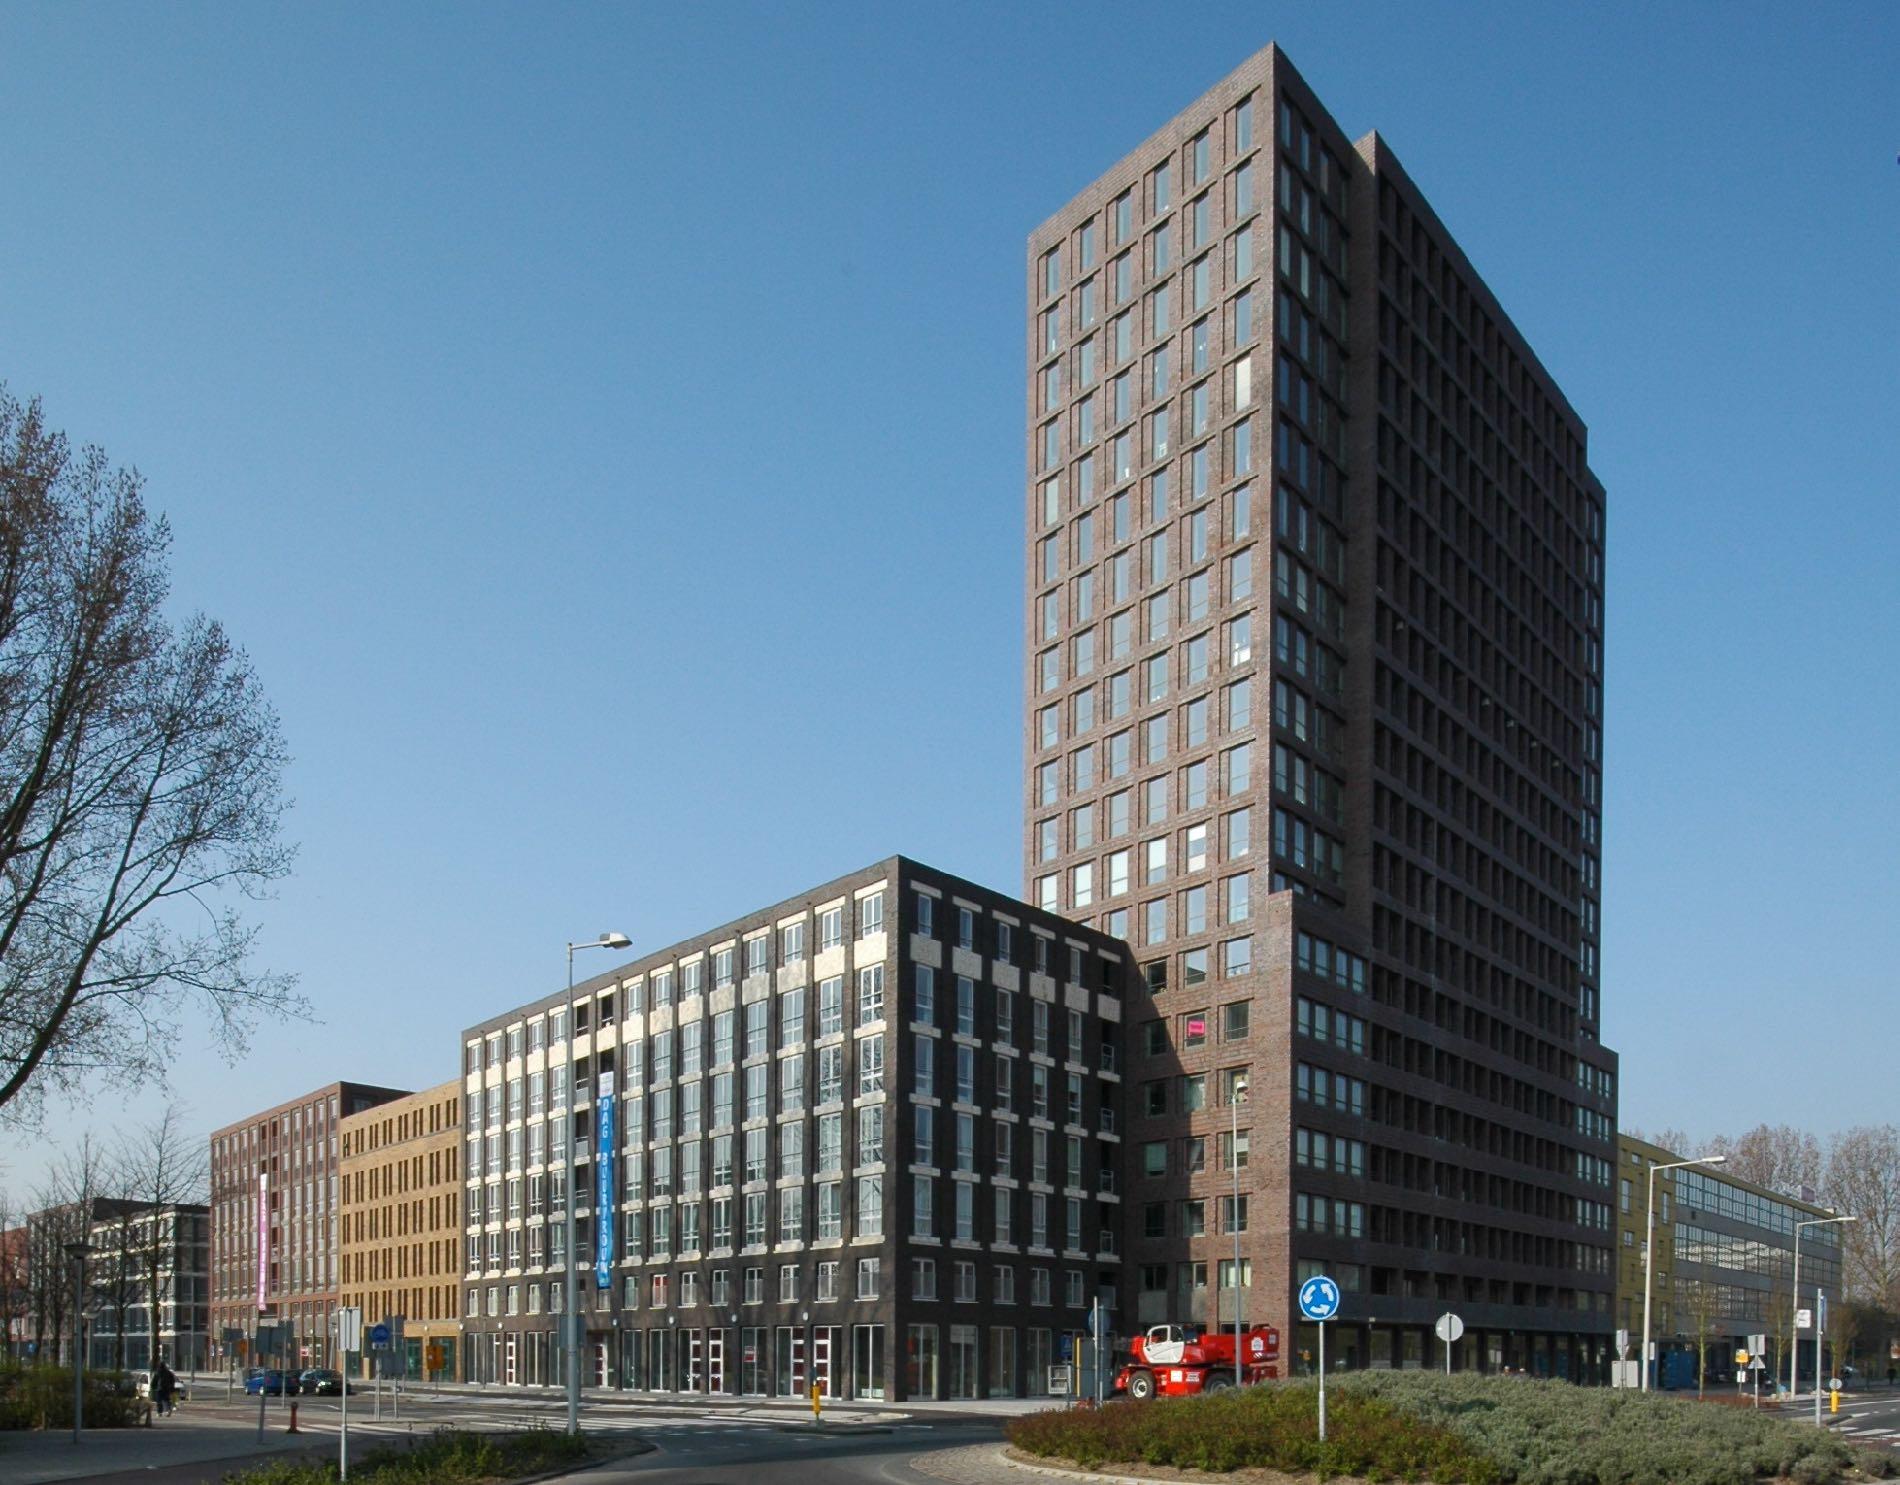 Appartementen Jatopa, Amsterdam - KENK Architecten 1a